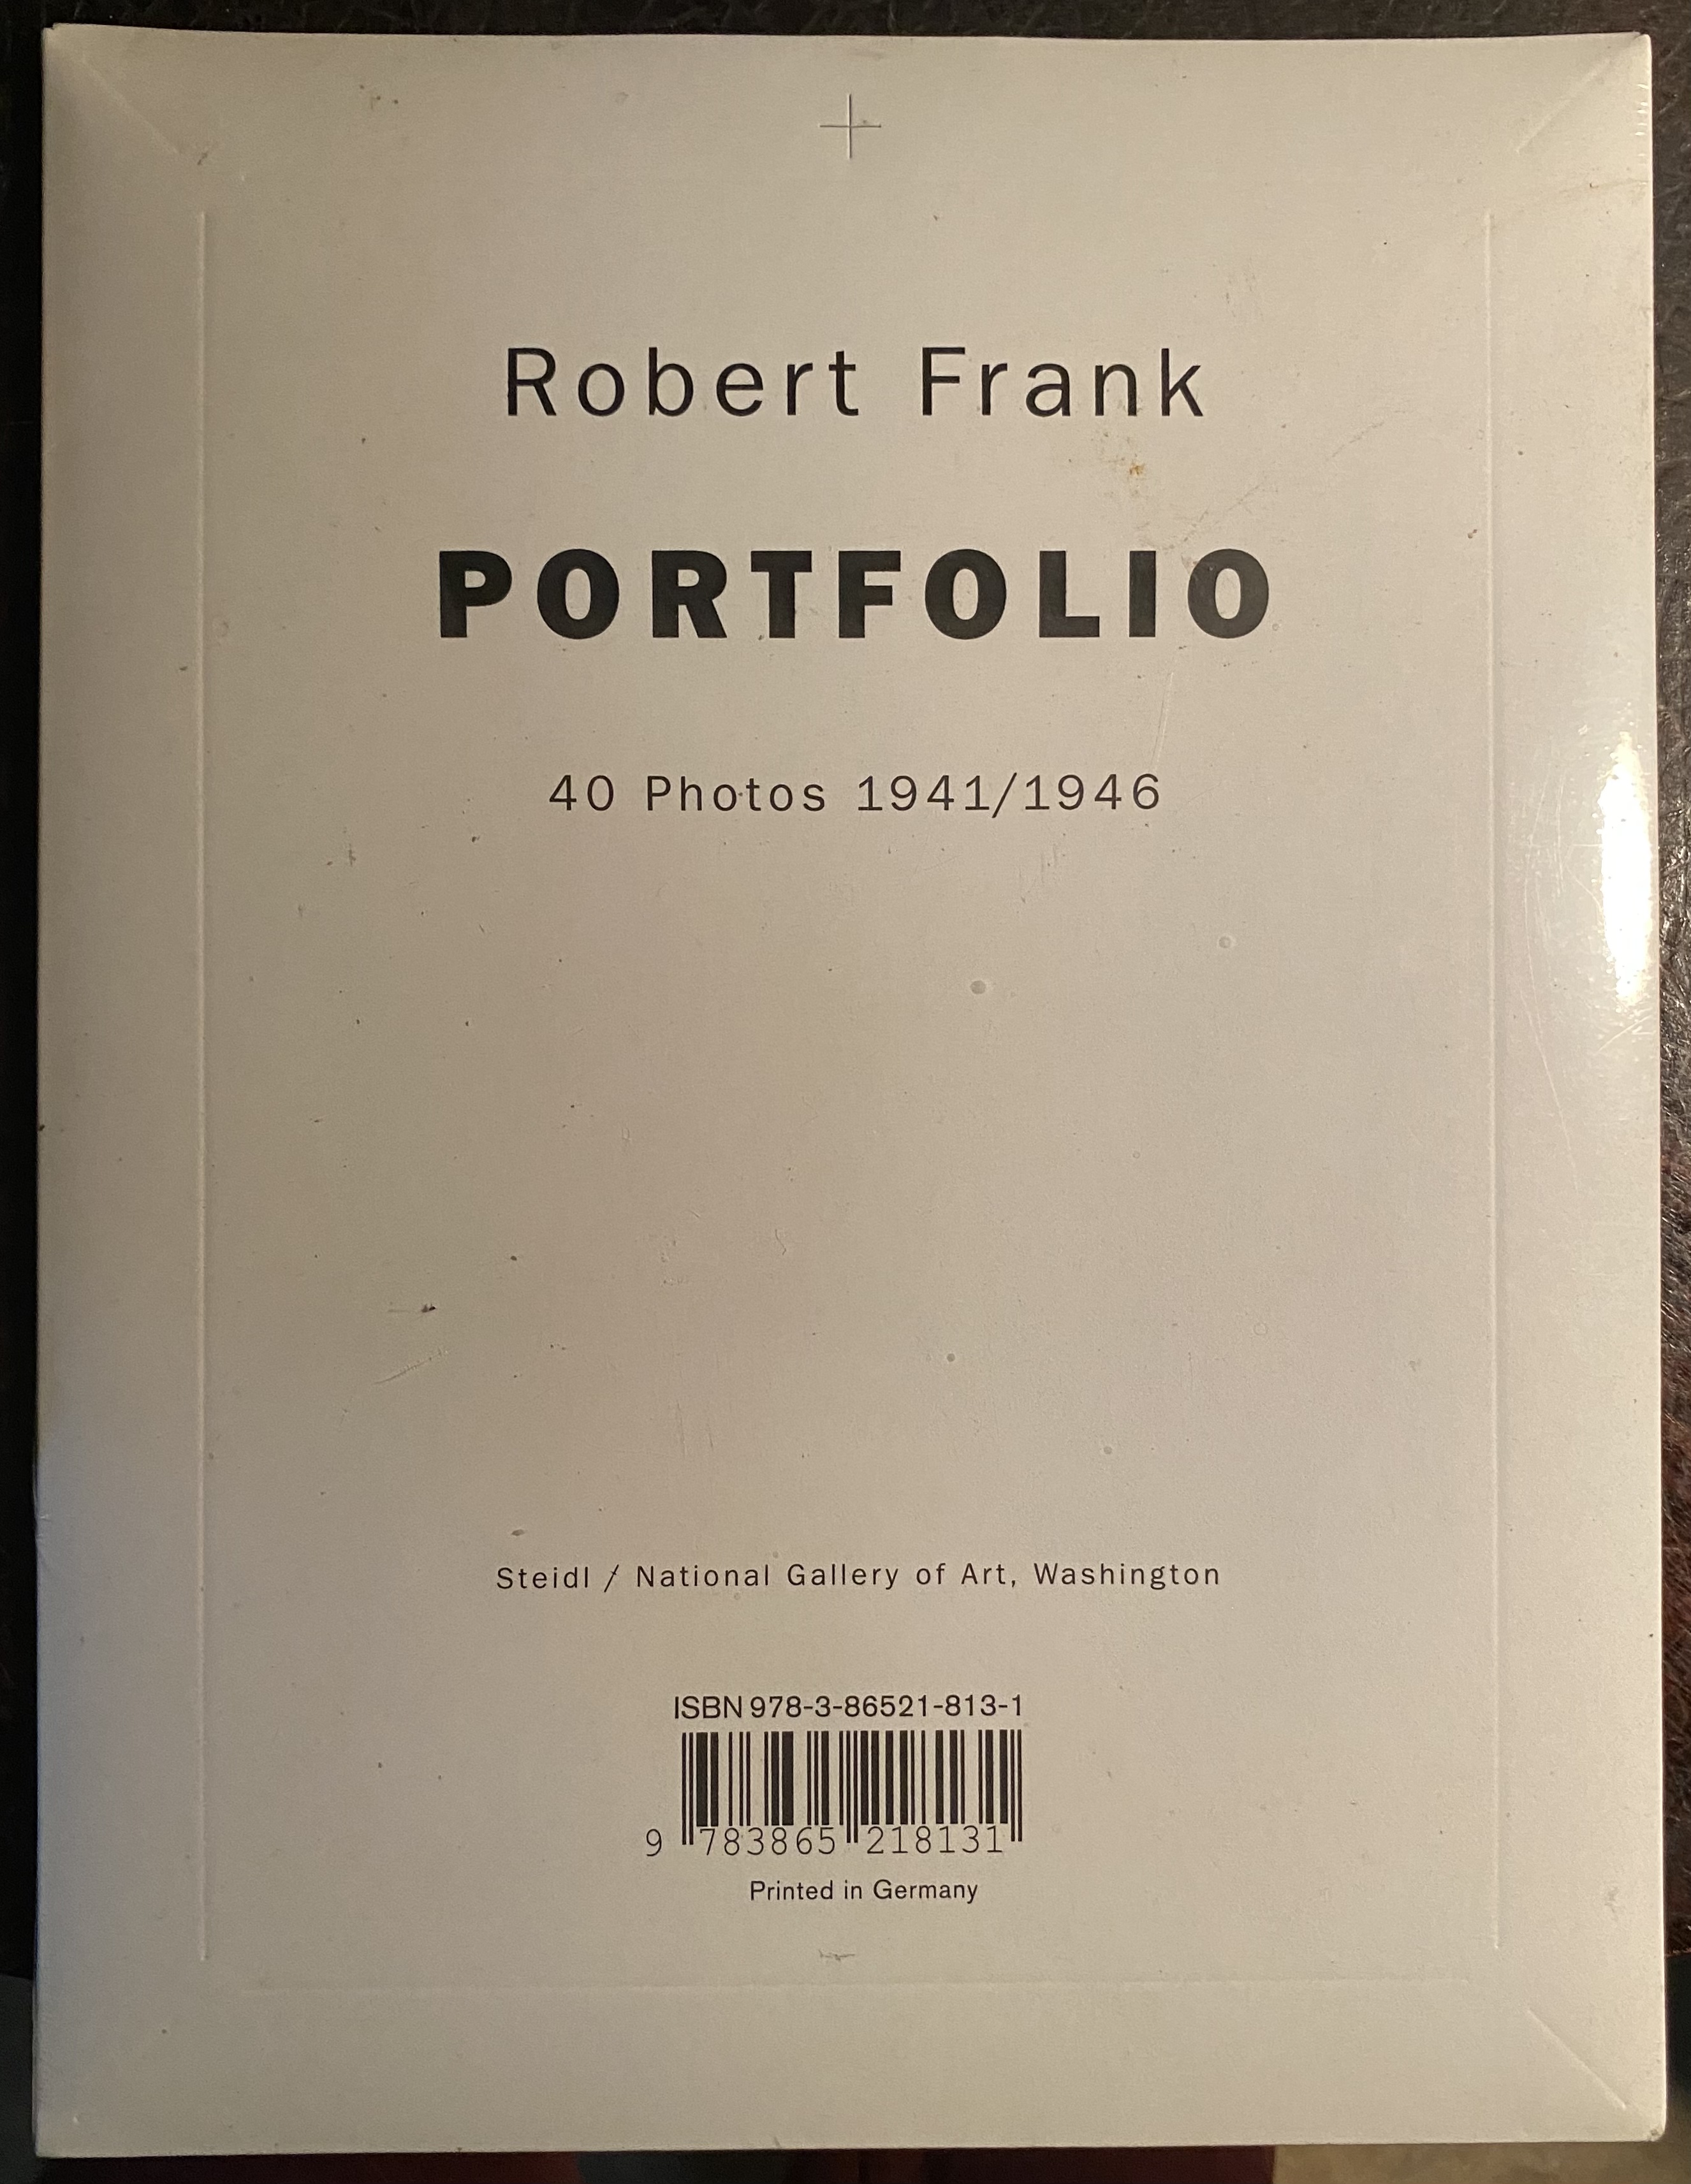 Robert Frank: Portfolio 40 photos 1941/1946 (sealed) - Robert Frank